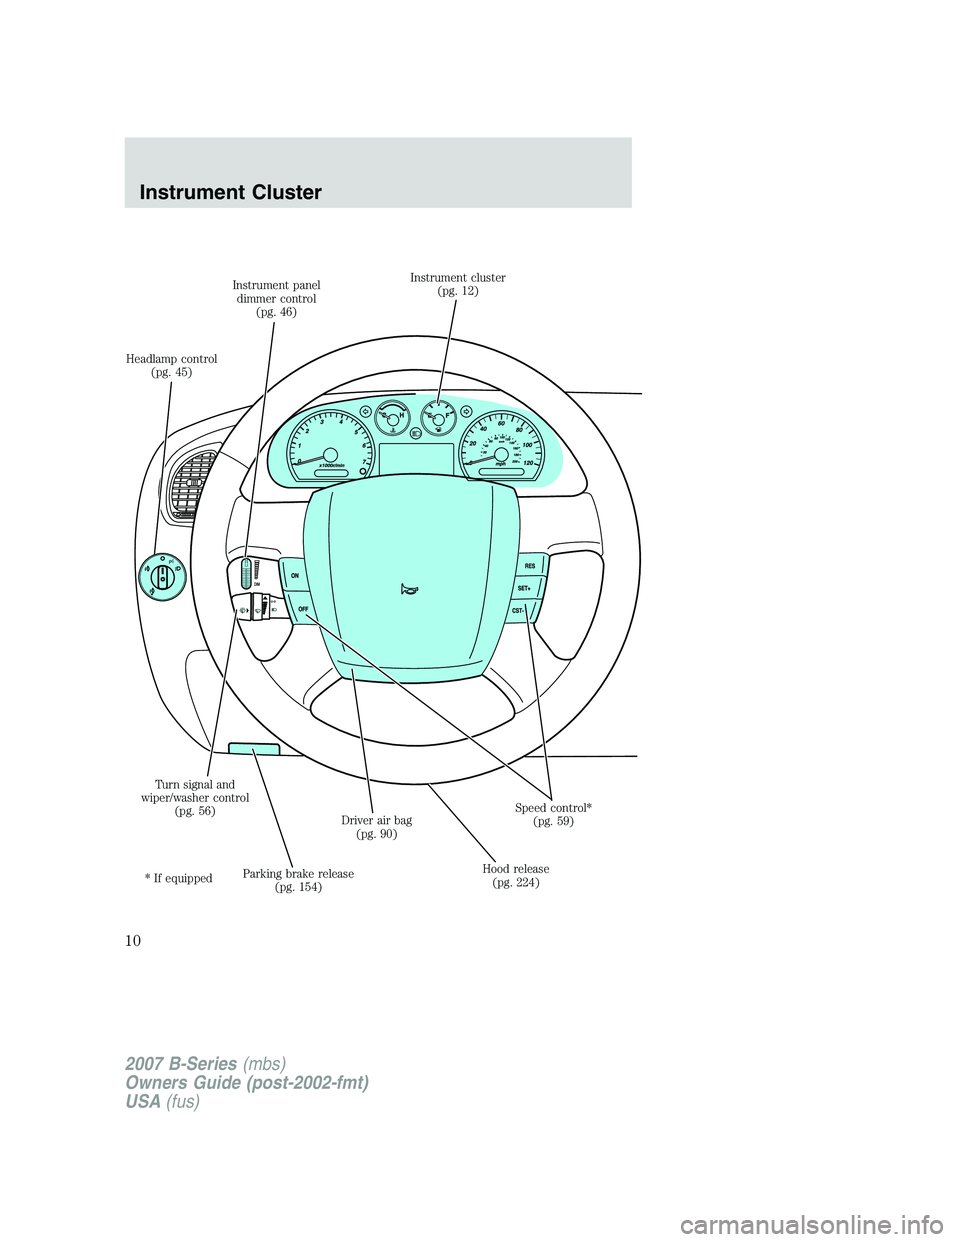 MAZDA MODEL B3000 TRUCK 2007  Owners Manual Headlamp control(pg. 45) Instrument panel
dimmer control (pg. 46) Instrument cluster
(pg. 12)
Speed control*(pg. 59)
Hood release (pg. 224)
Driver air bag
(pg. 90)
Parking brake release (pg. 154)
Turn